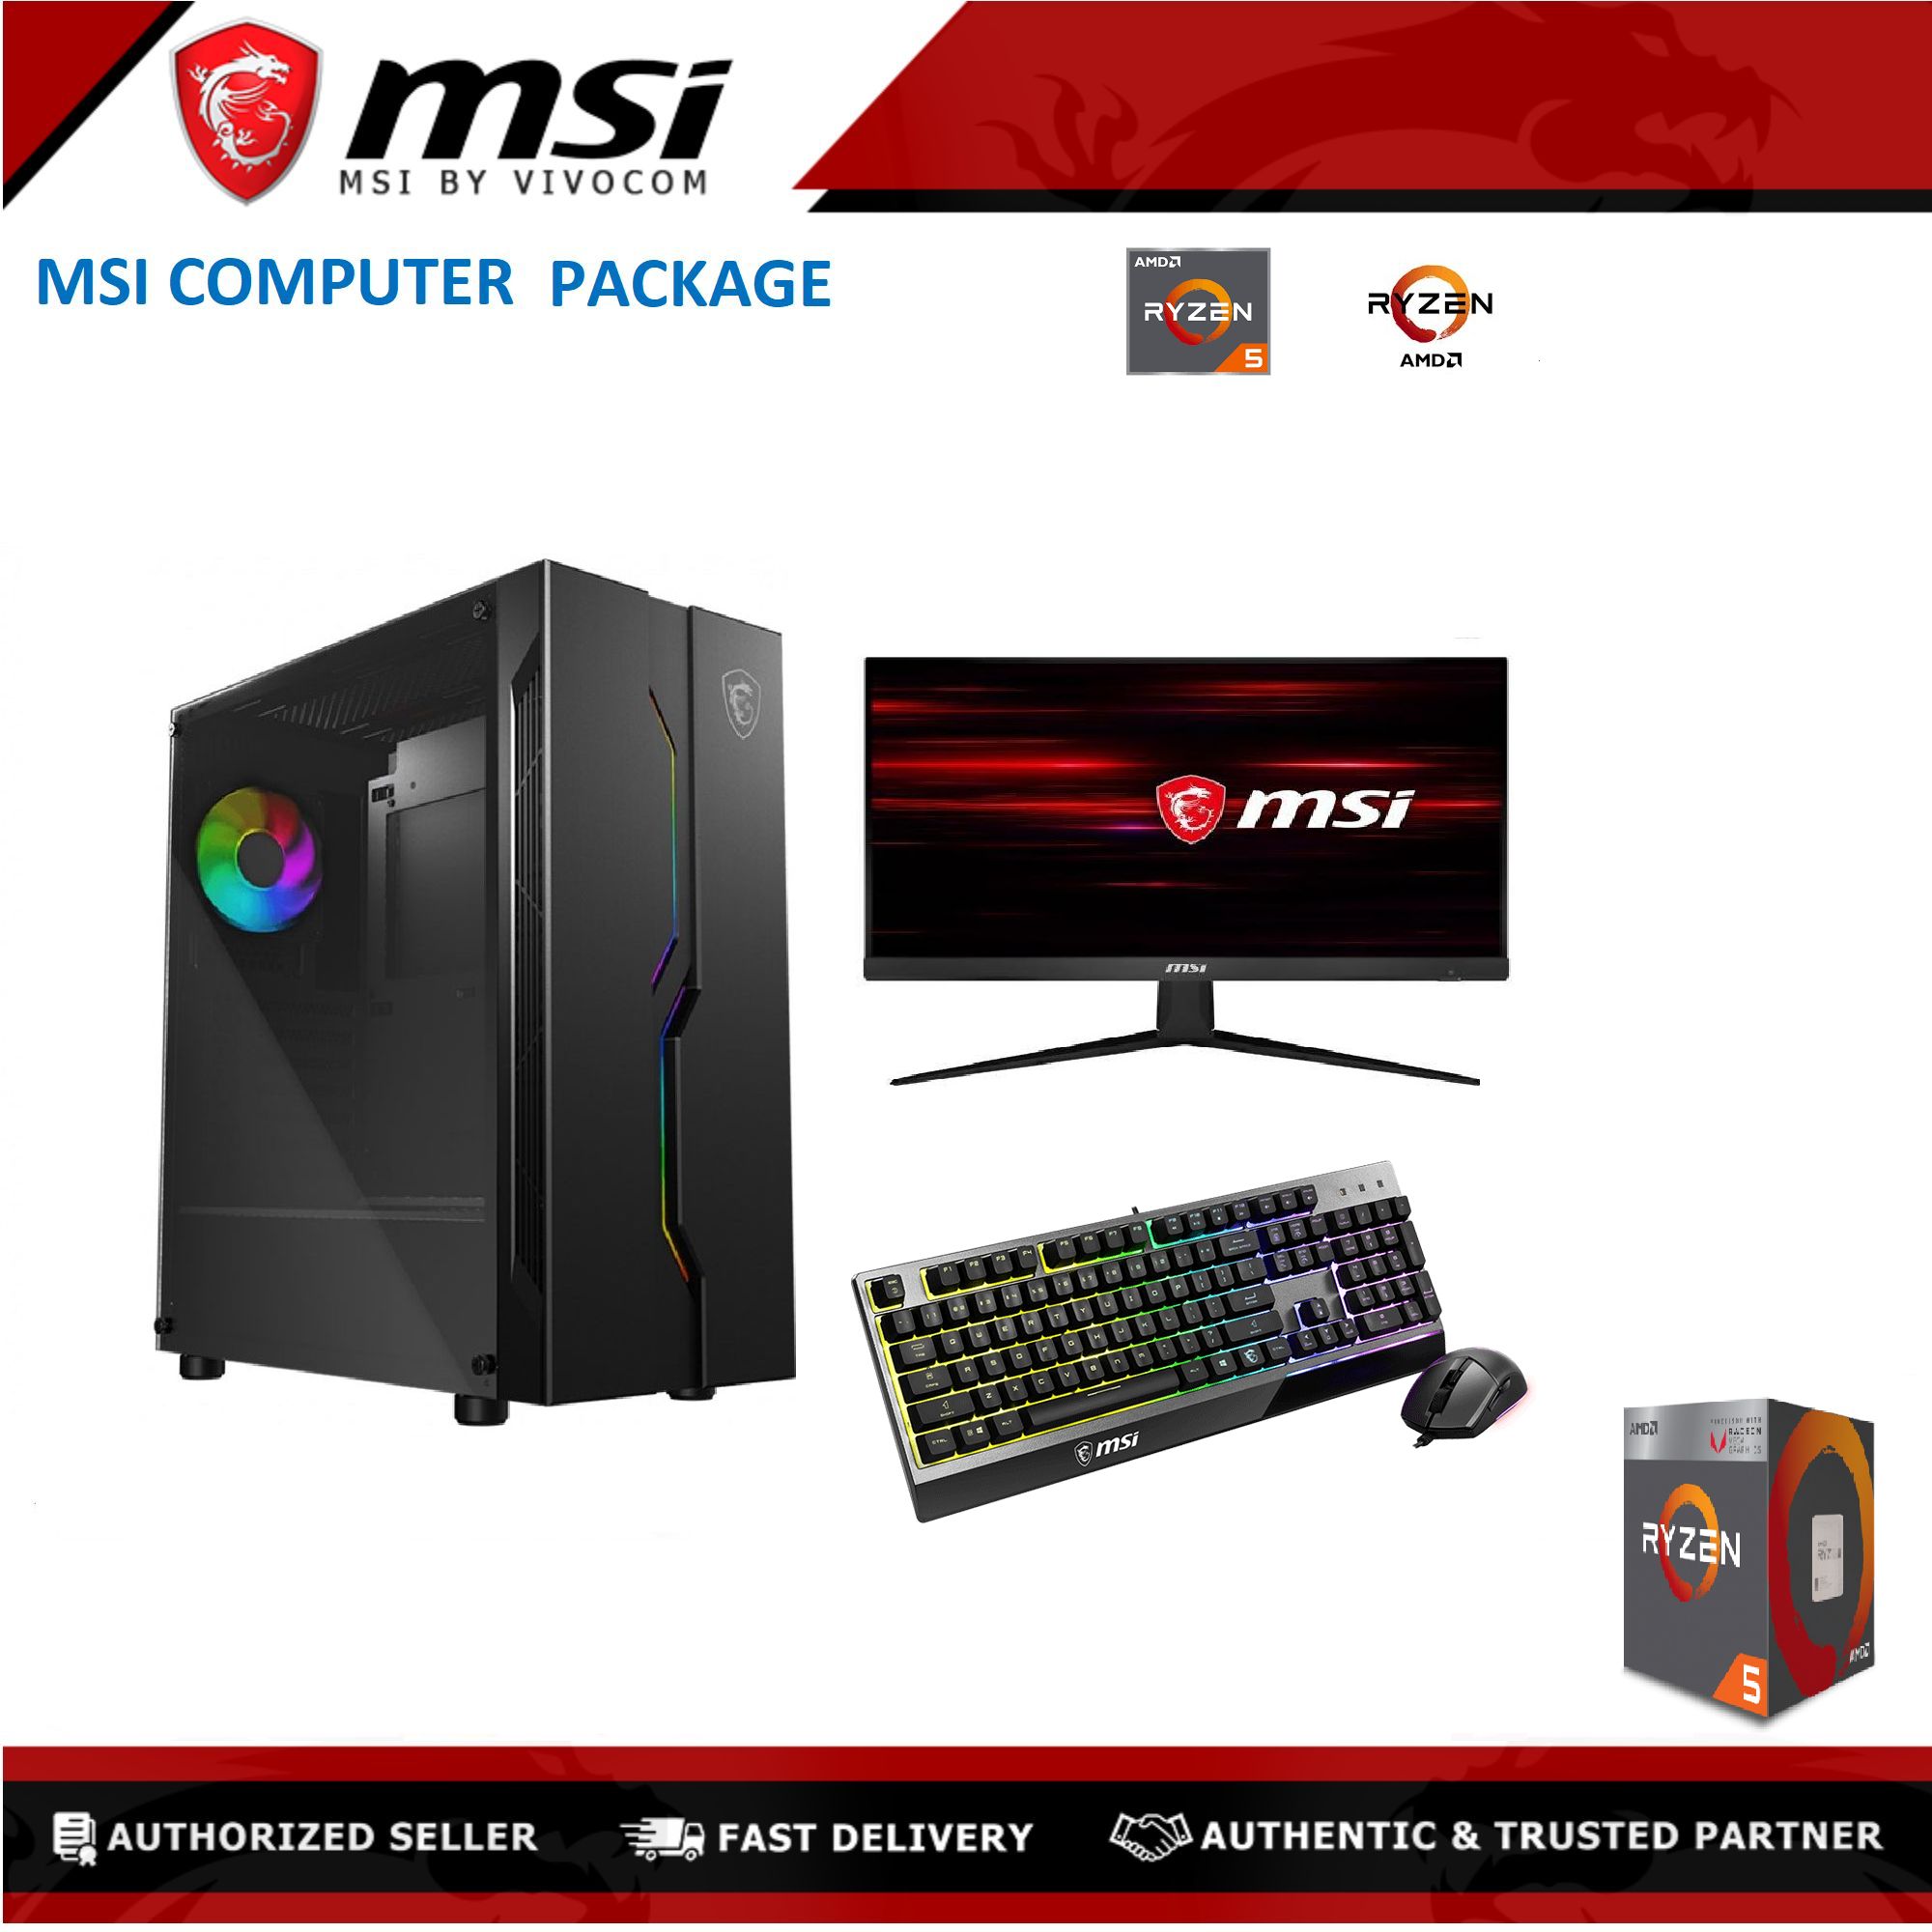 MSI COMPUTER DESKTOP PACKAGE / AMD RYZEN 5 PRO 2400GE / MSI A320M